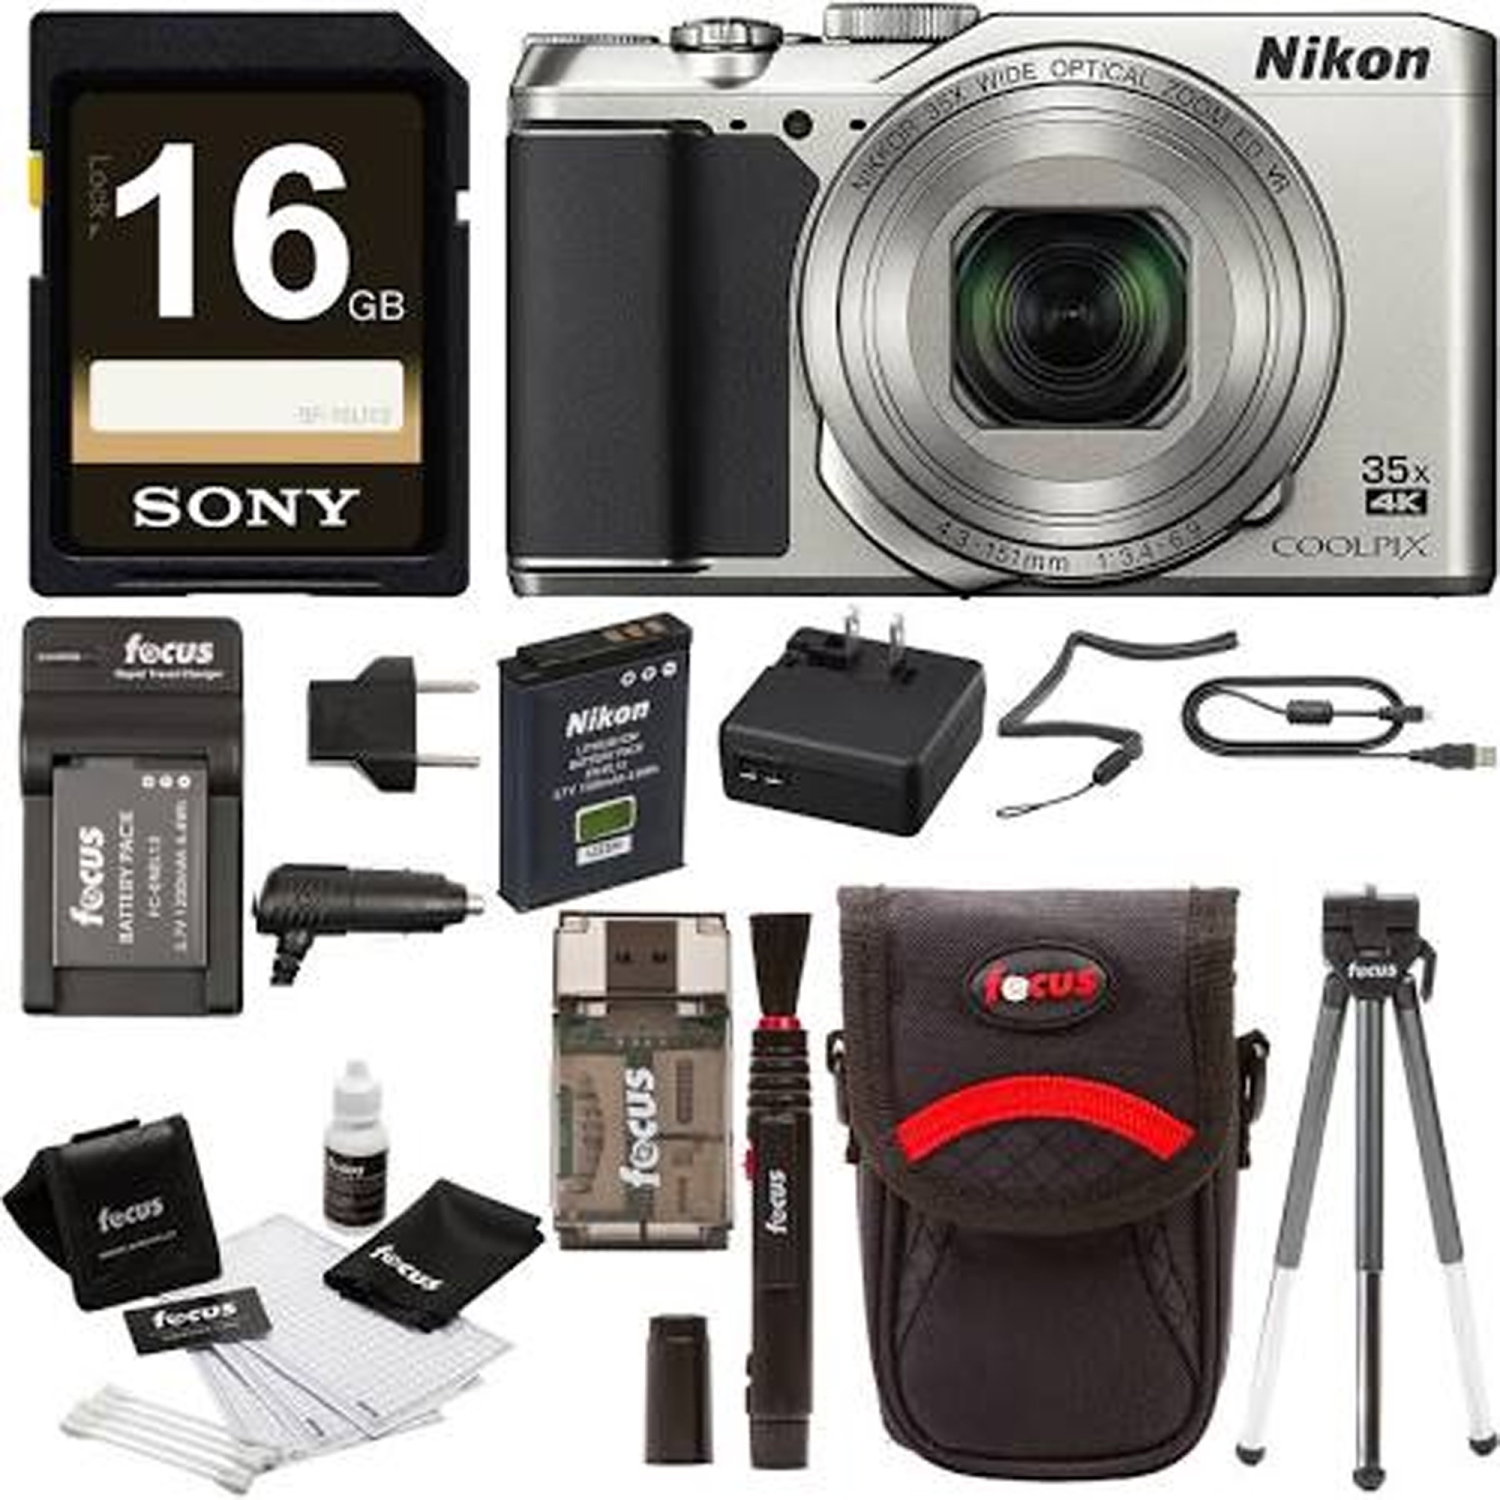 Nikon Coolpix A900 Digital Camera (Silver) w/ 16GB Card Bundle - US Version w/ Seller Warranty